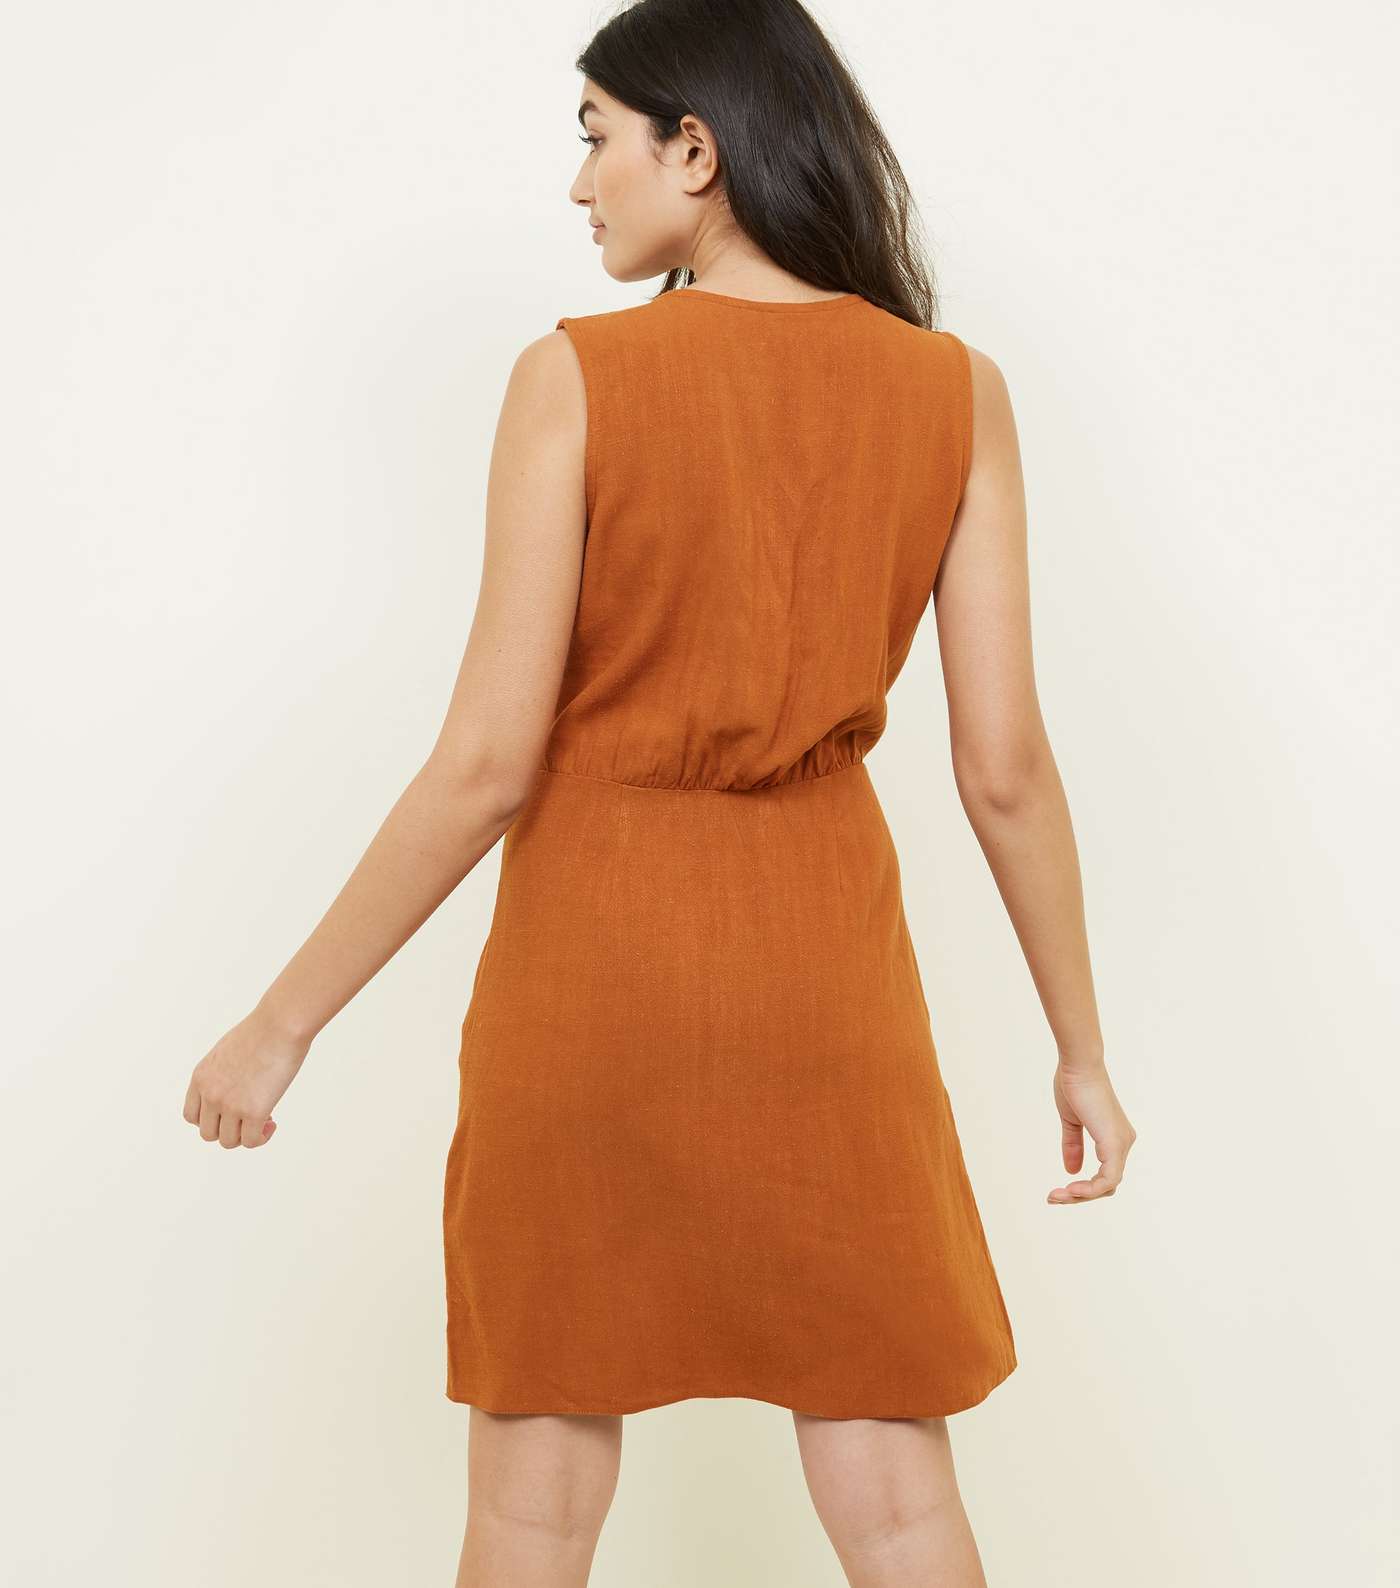 Rust Linen-Look Button Front Wrap Dress Image 3